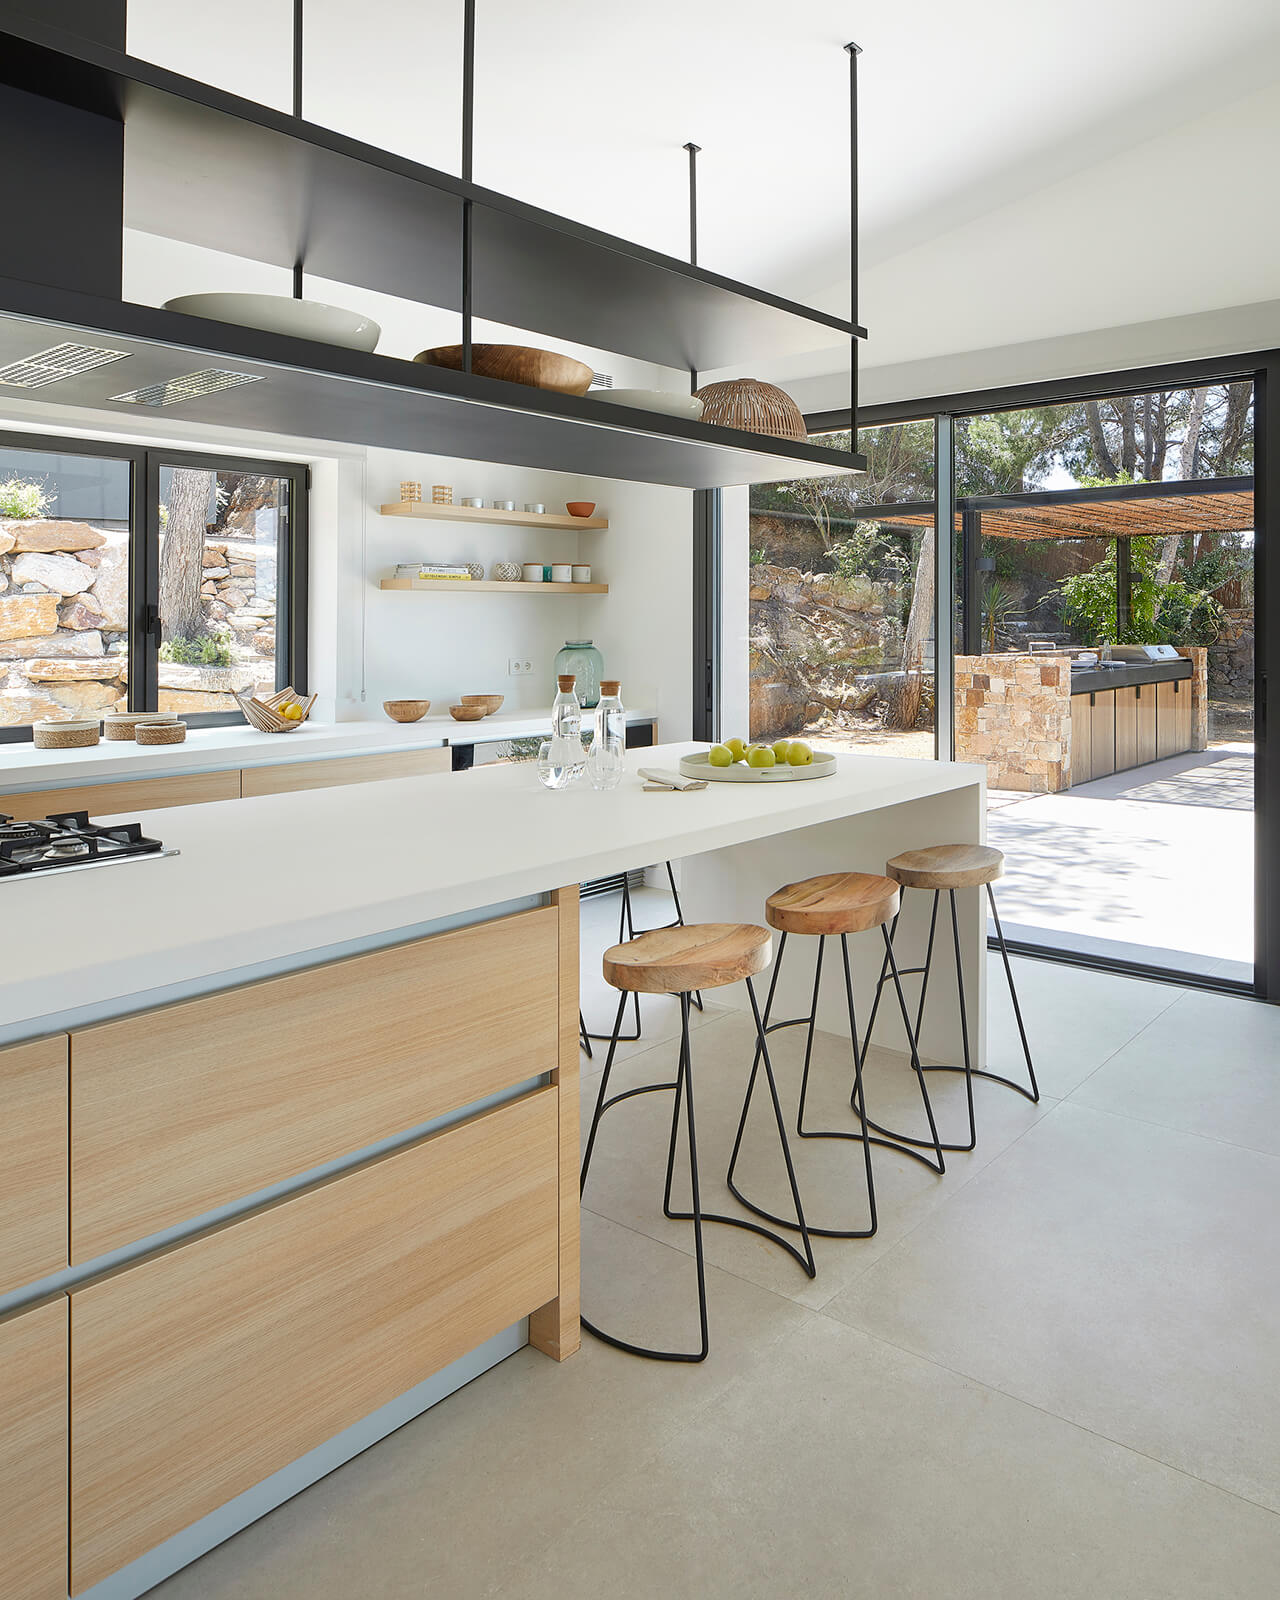 Bright Santos kitchen in grey and wood